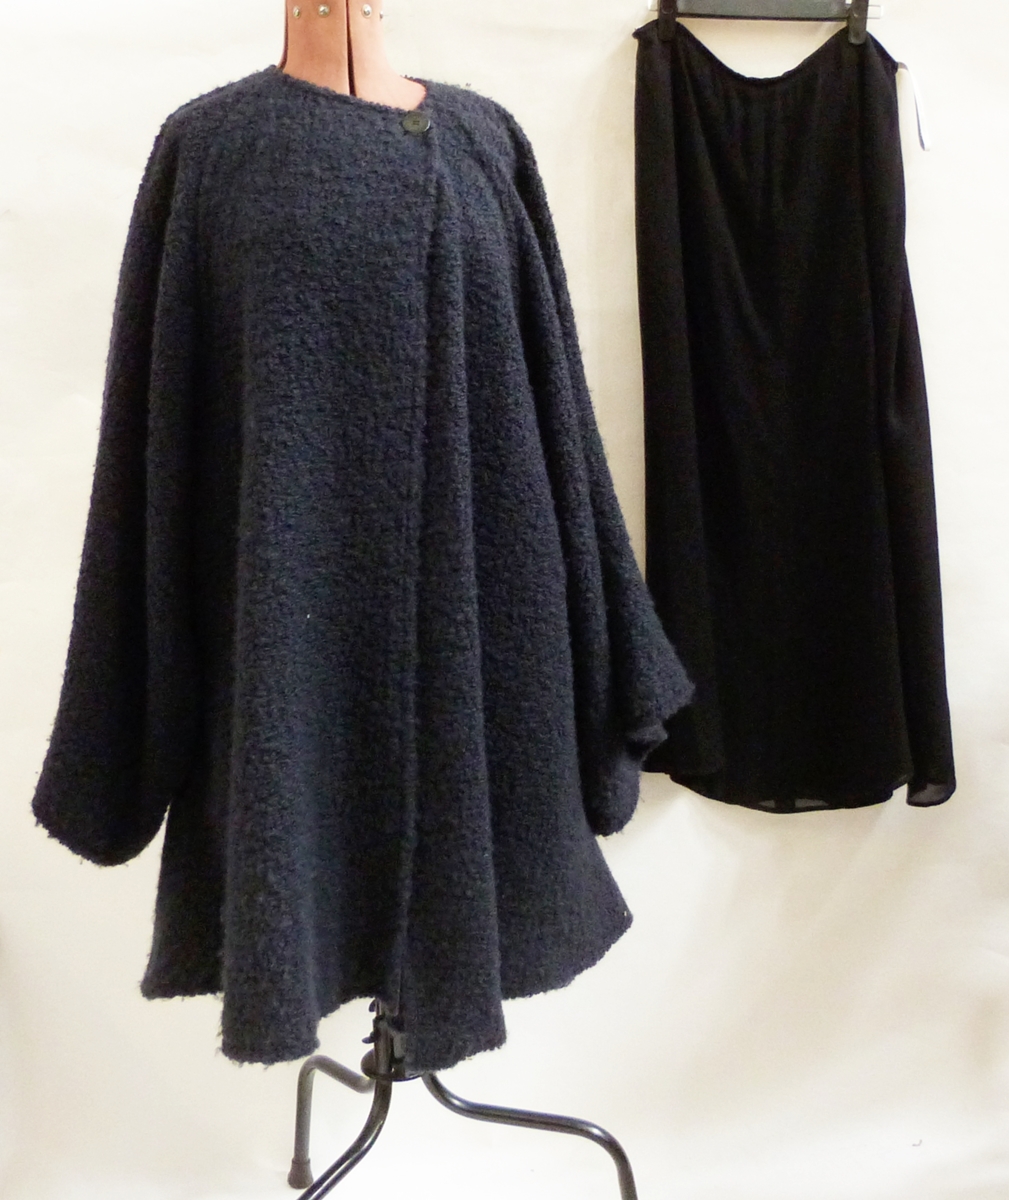 Caroline Charles wool tweed three-quarter length coat with shawl collar, - Image 2 of 3